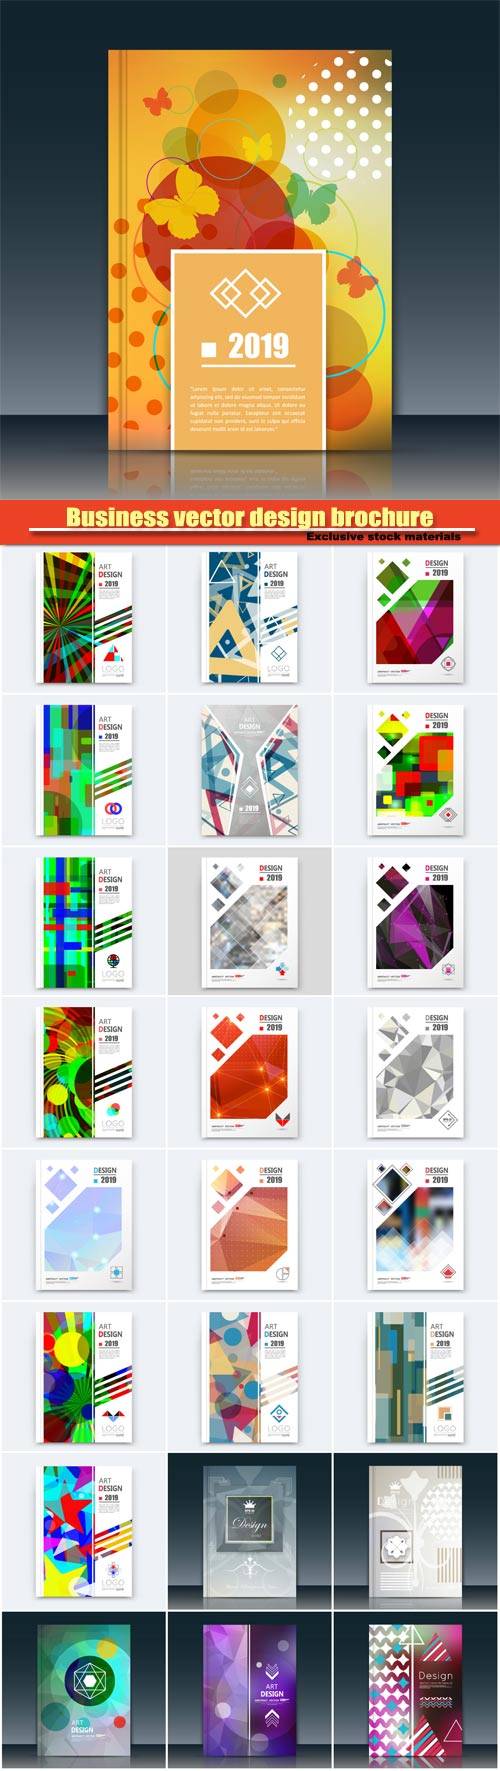 Business vector design brochure, banner template card